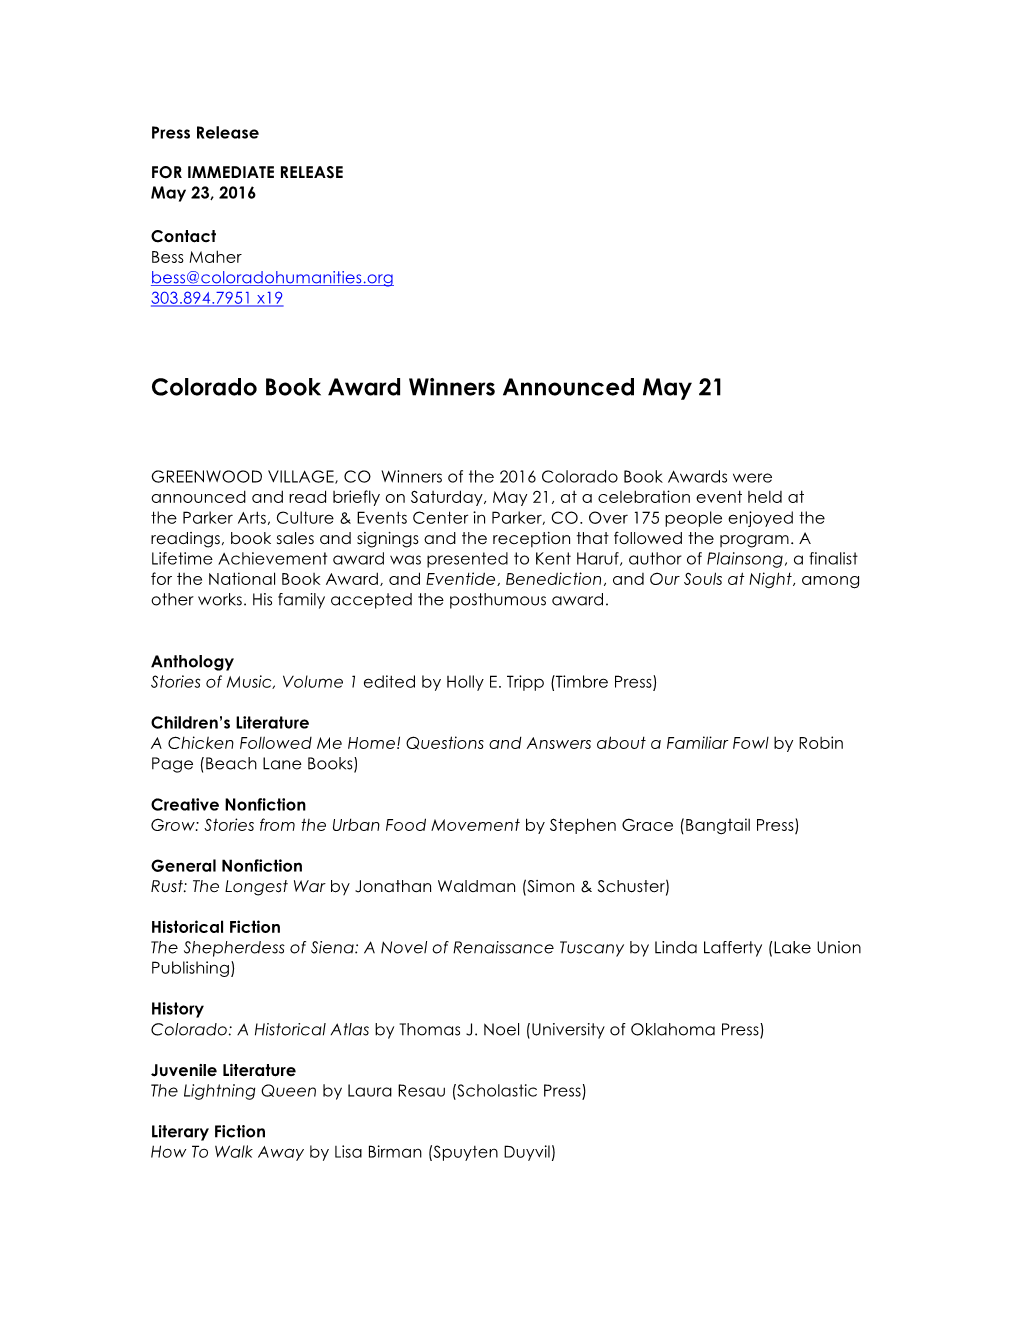 Colorado Book Award Winners Announced May 21